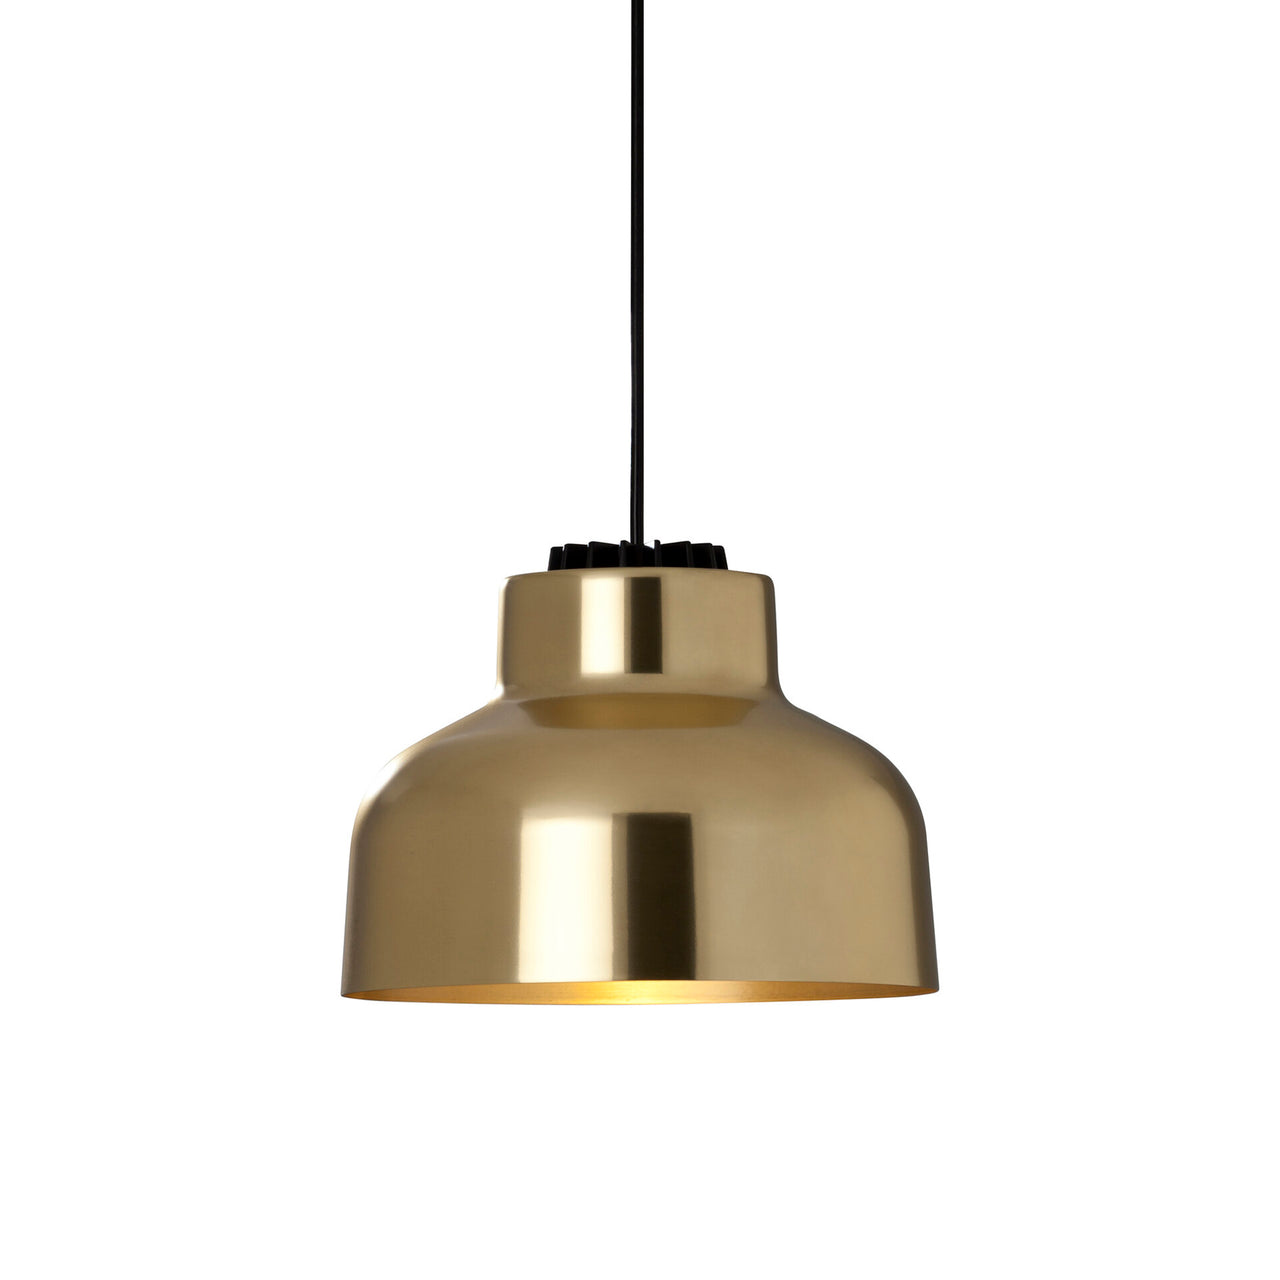 M64 Pendant Lamp: Polished Brass